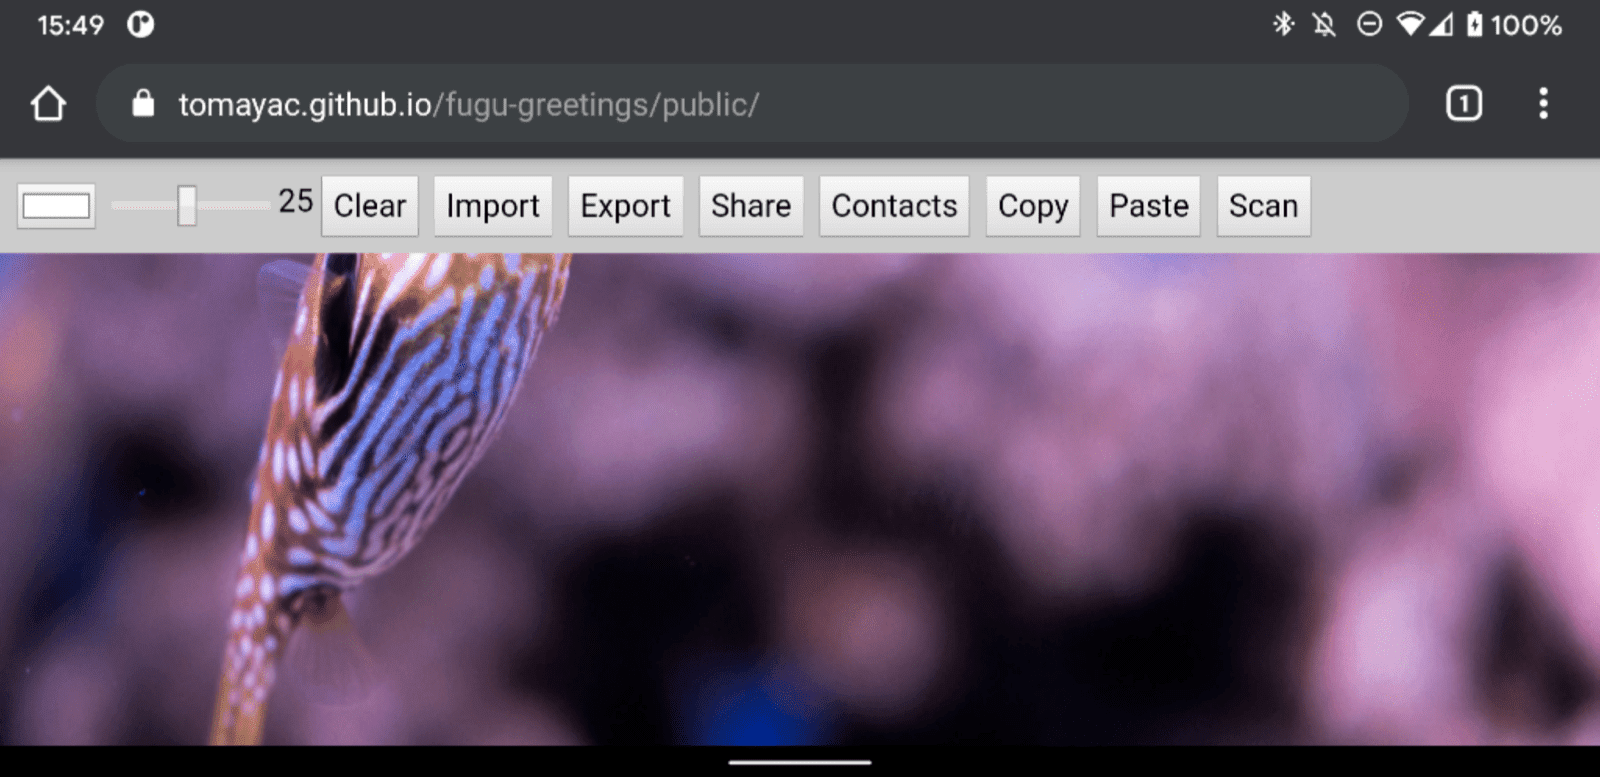 Fugu Greetings en Android Chrome, mostrando muchas funciones disponibles.